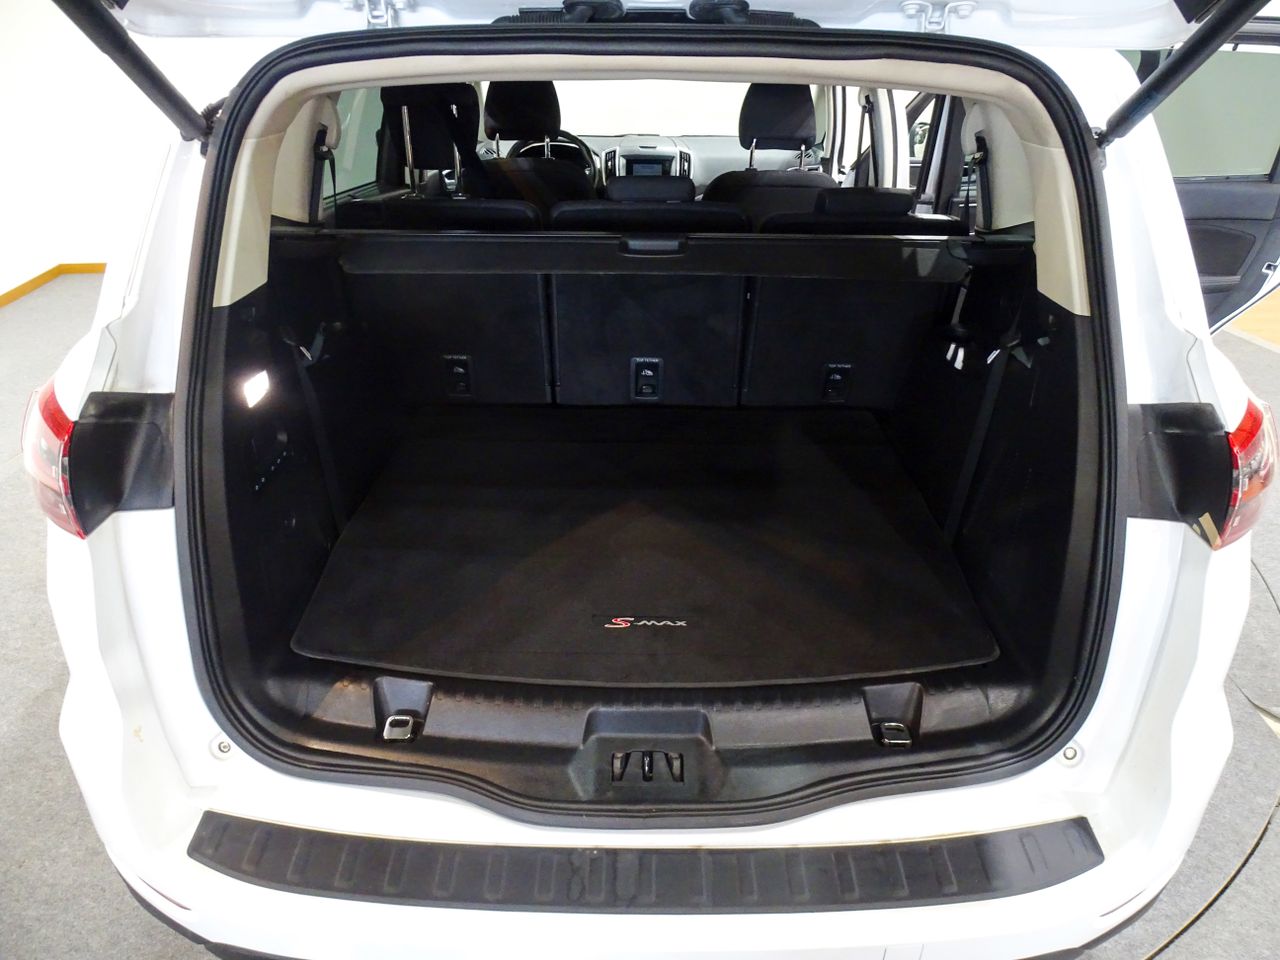 Ford S Max 2.0 TDCi 110kW ( 150CV )   PowerShift Titanium  - Foto 2